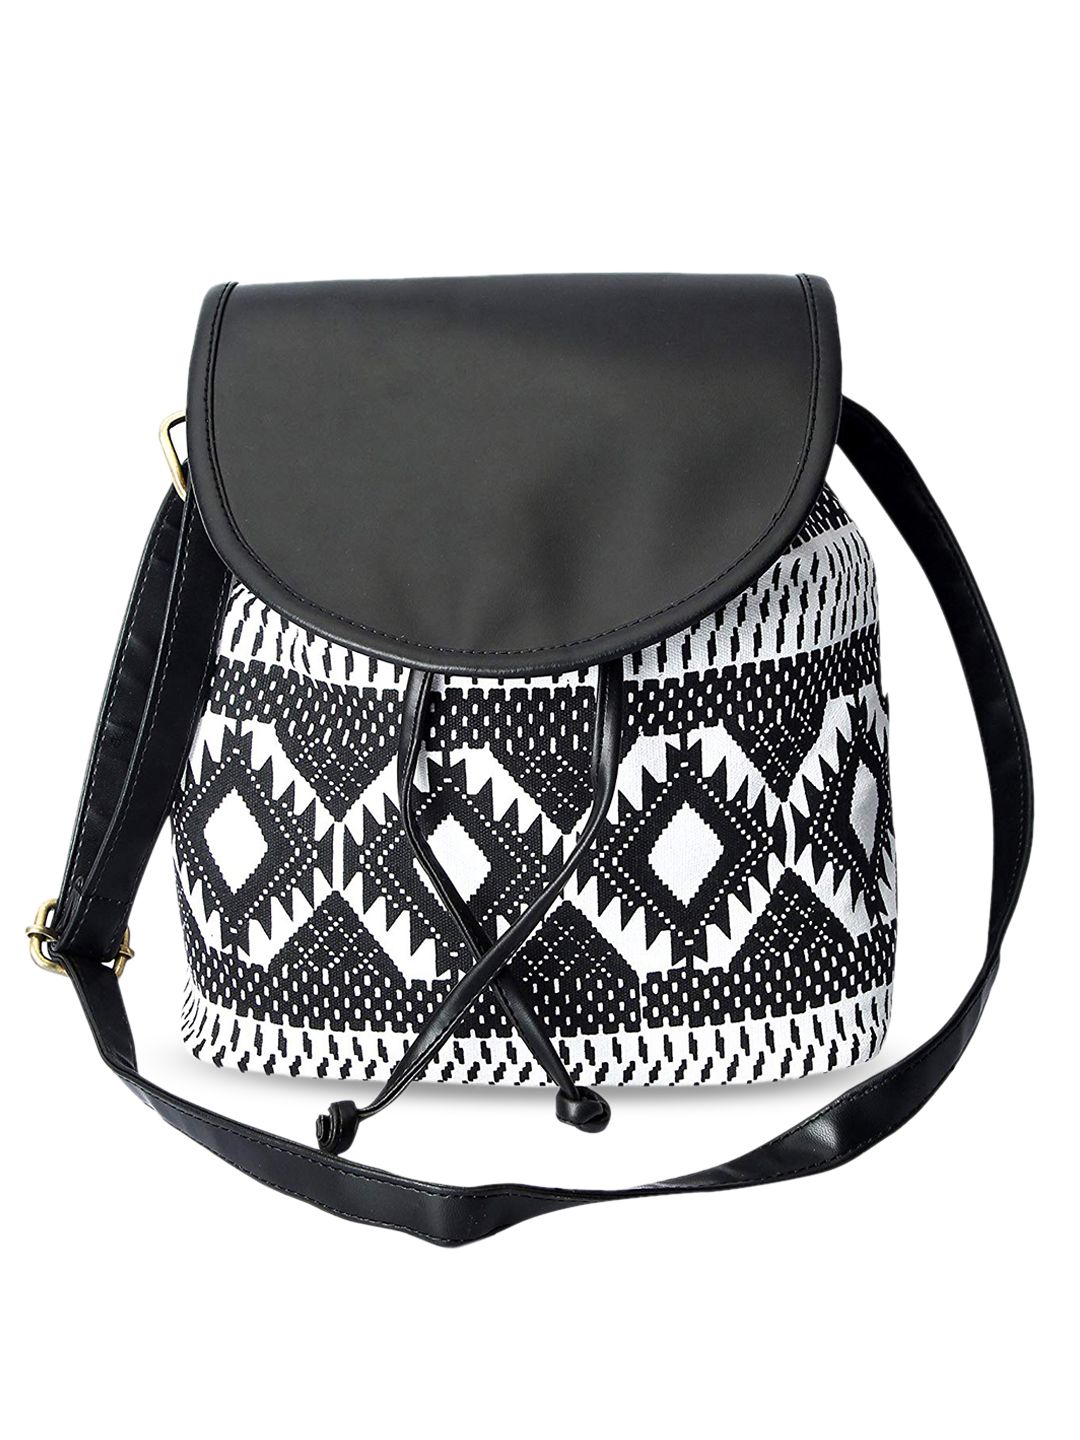 Lychee bags Black & White Printed Sling Bag Price in India